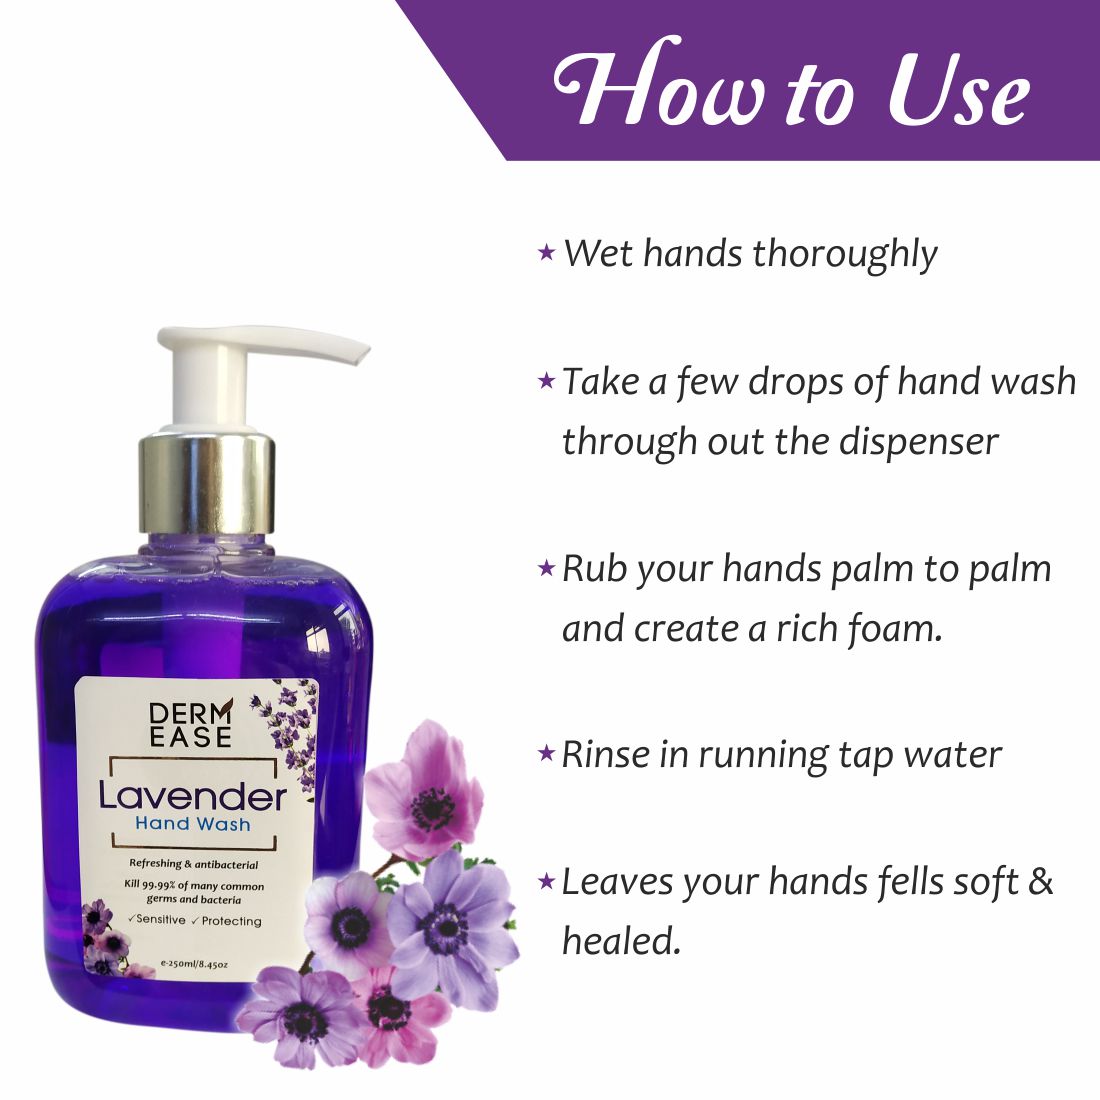 DERM EASE Lavender Hand Wash